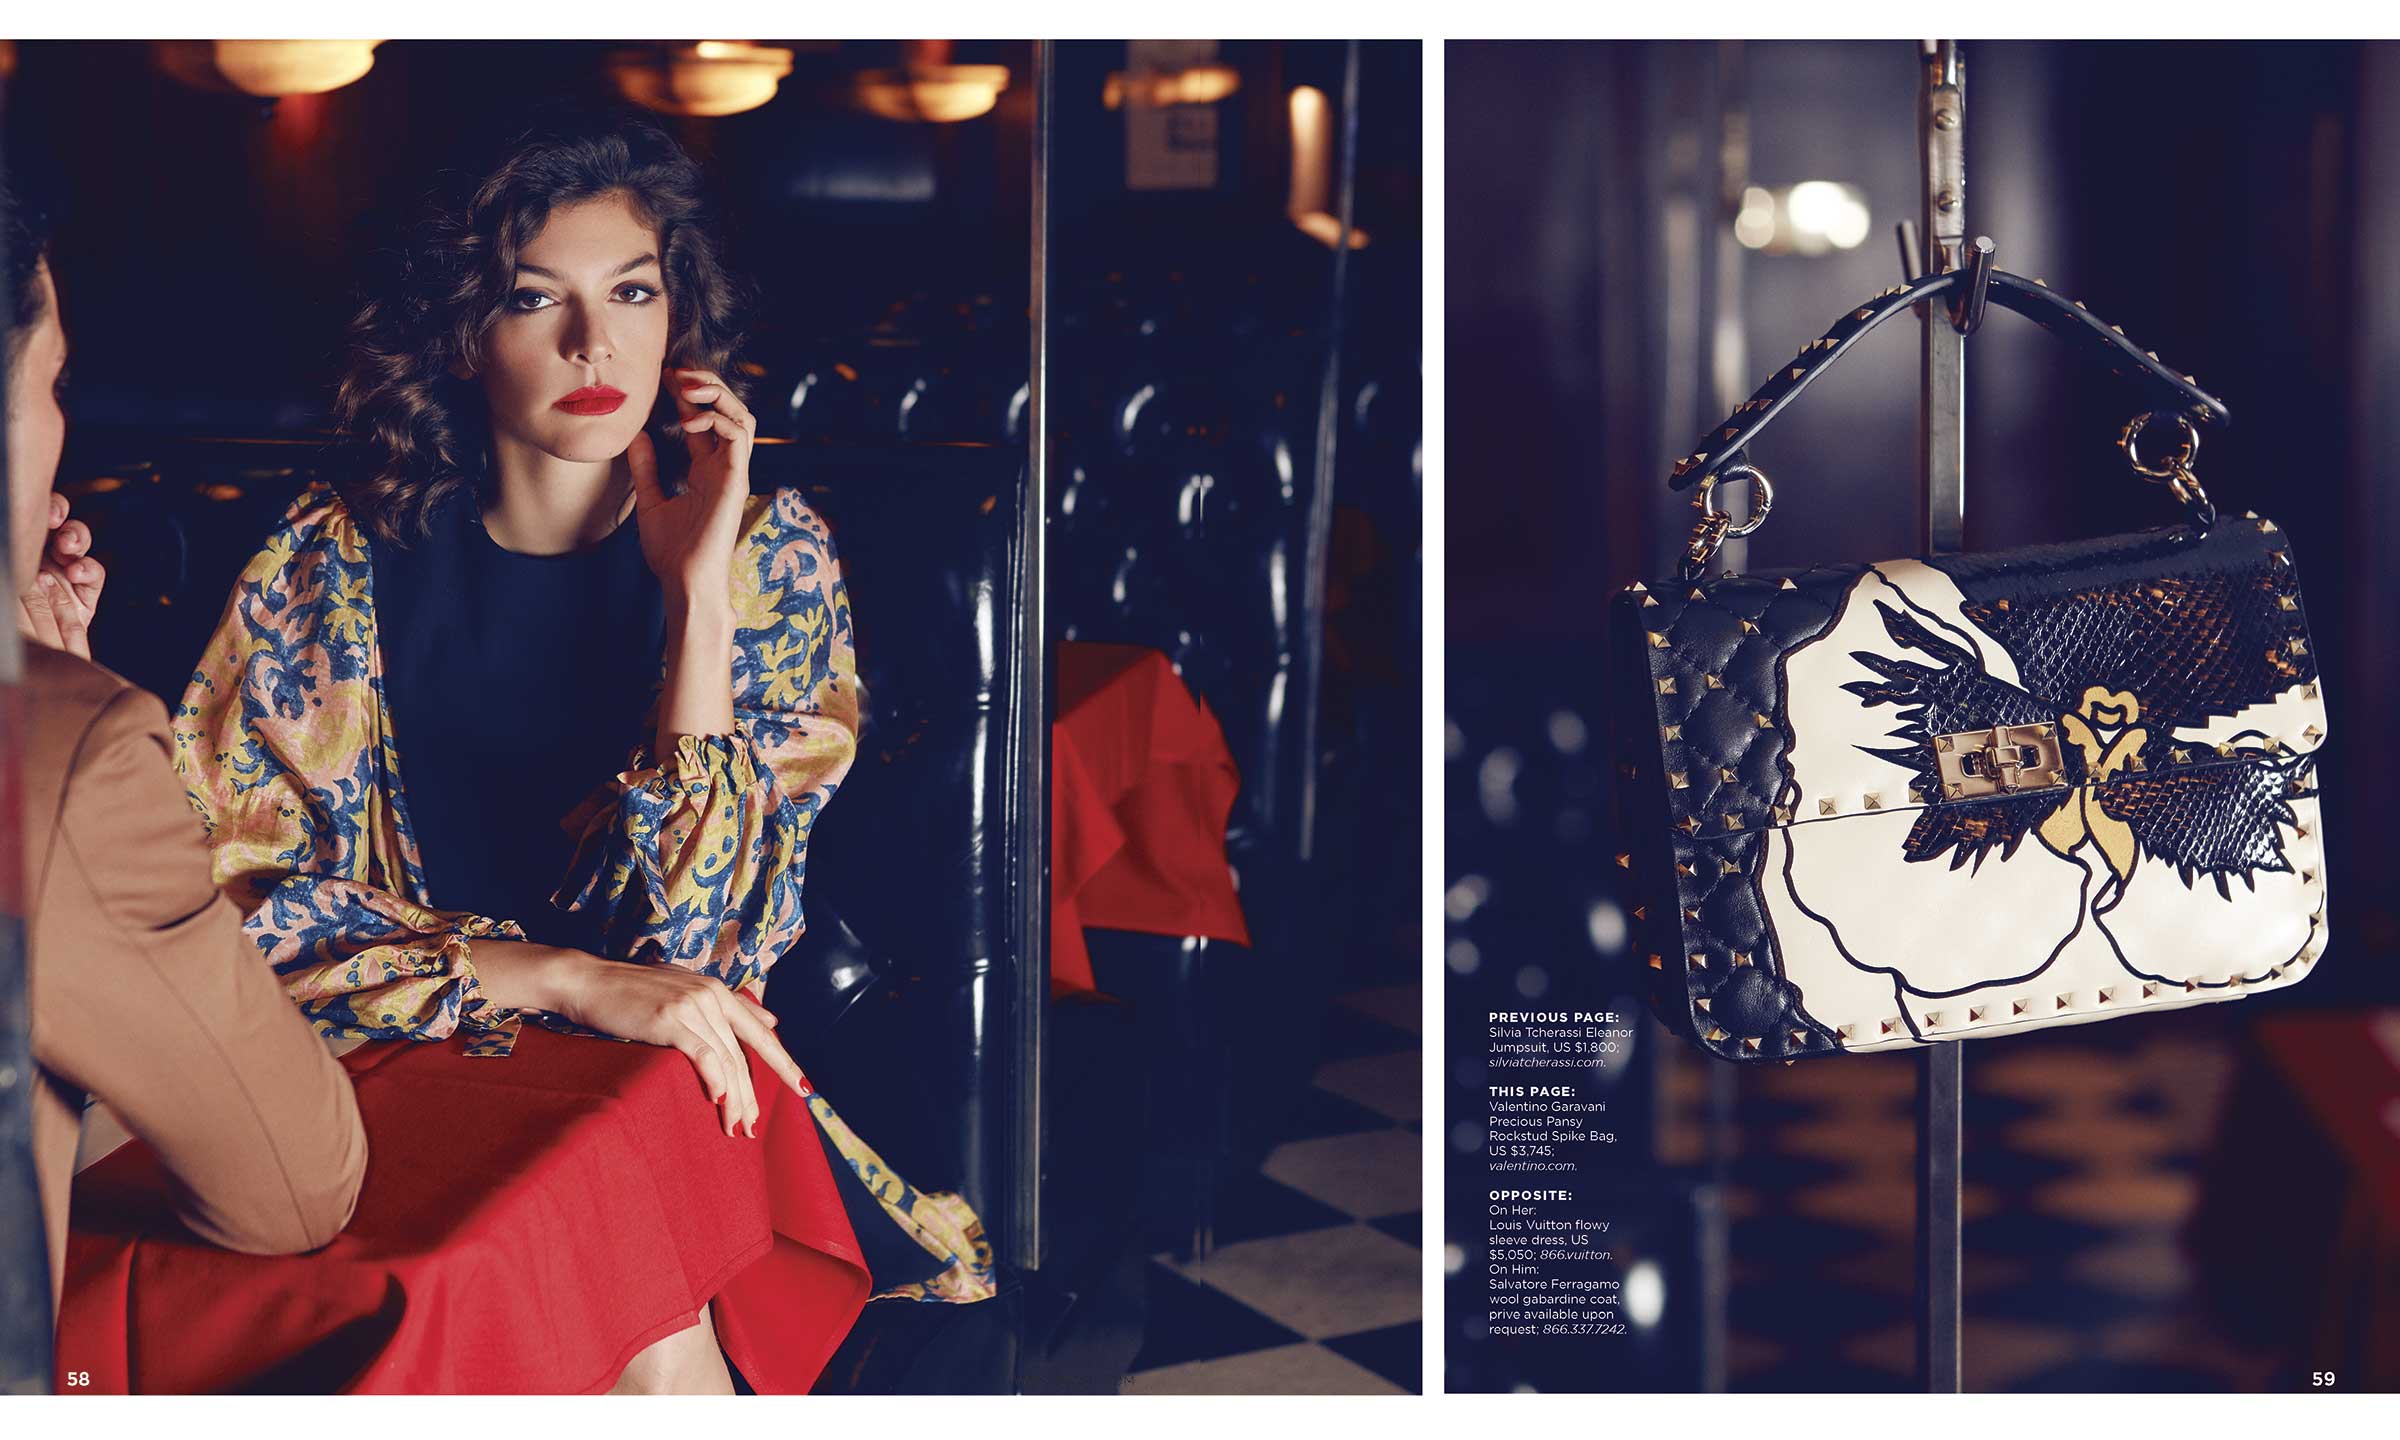 Fashion Story - Cover Story - JW Marriott Magazine - Essex House I Greg Sorensen I Fashion & Beauty Photographer I NYC